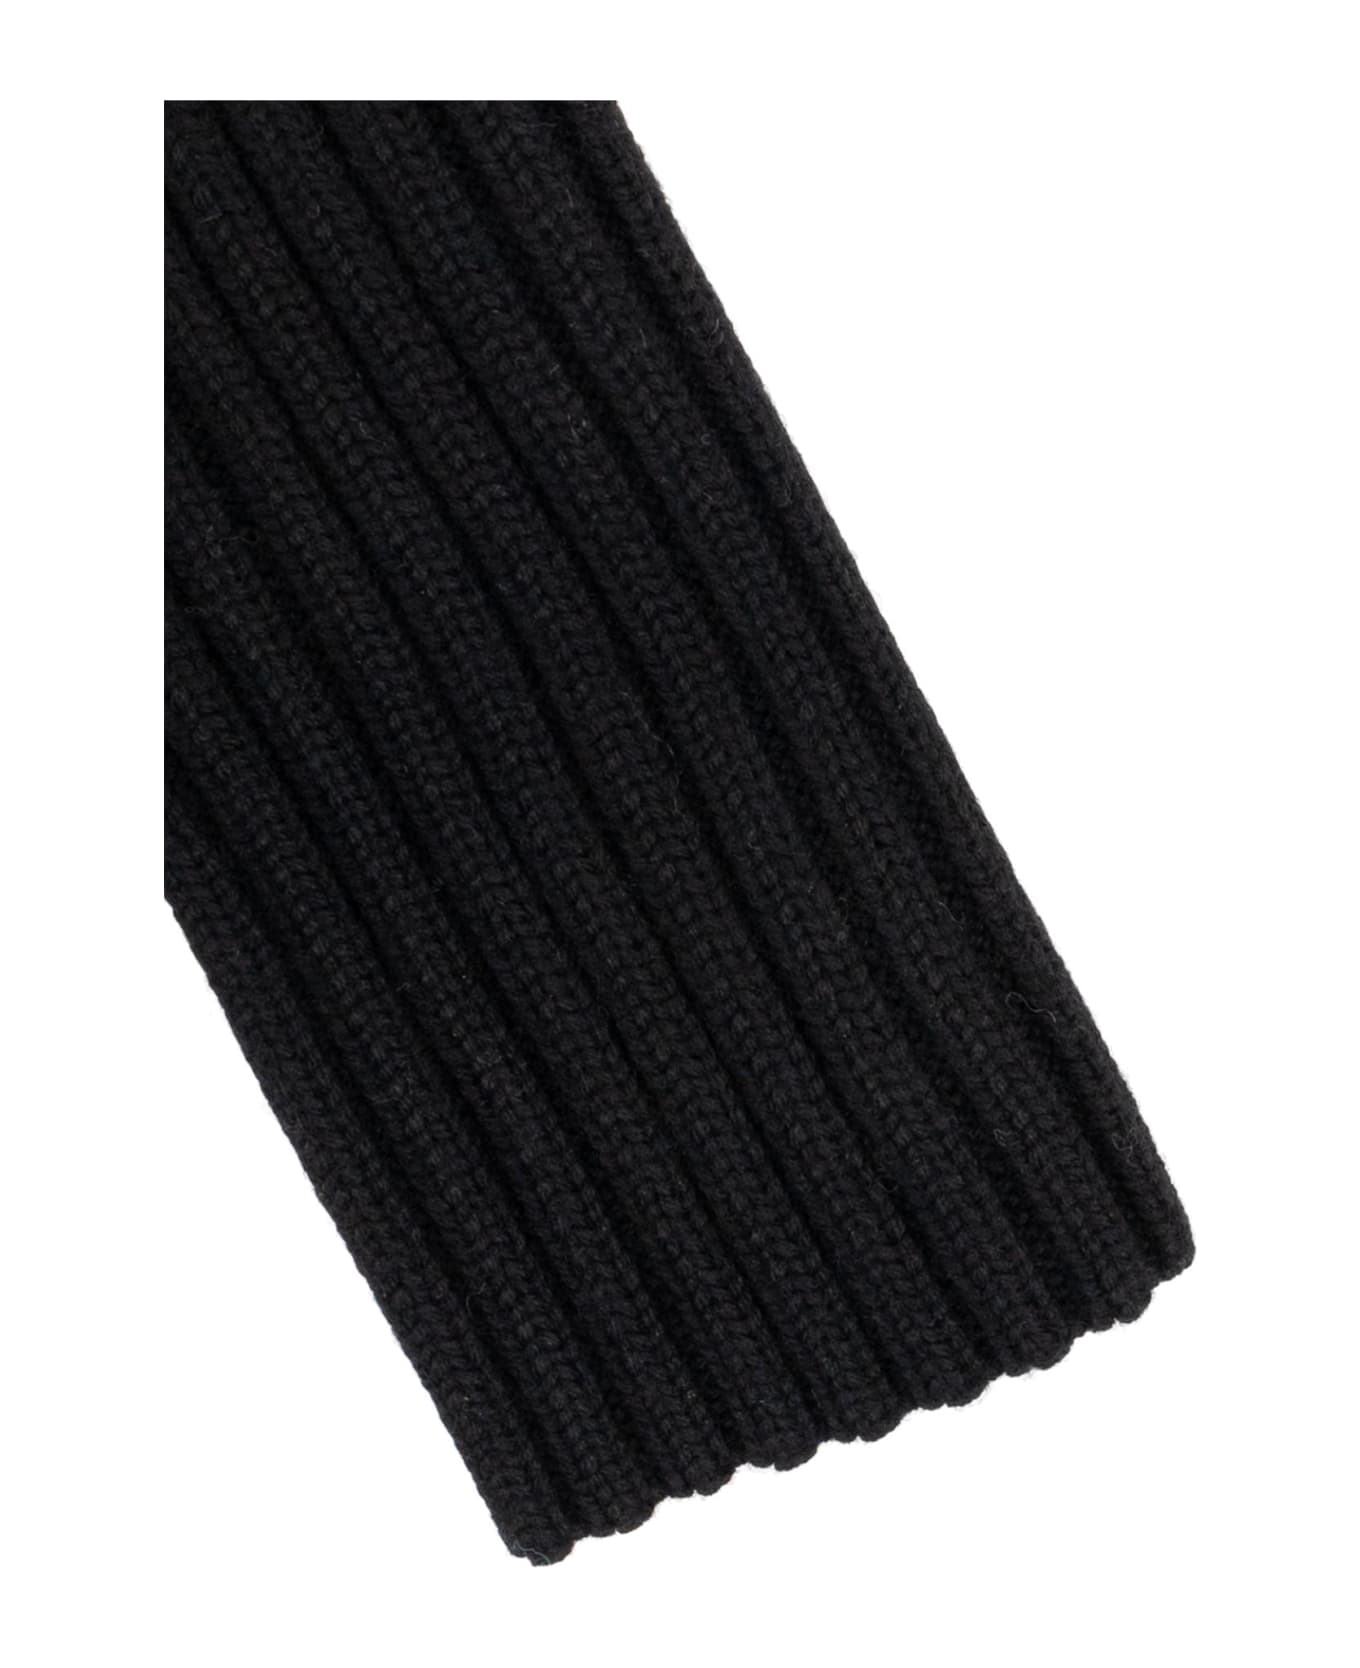 Totême Toteme Wool Gloves - 001 BLACK